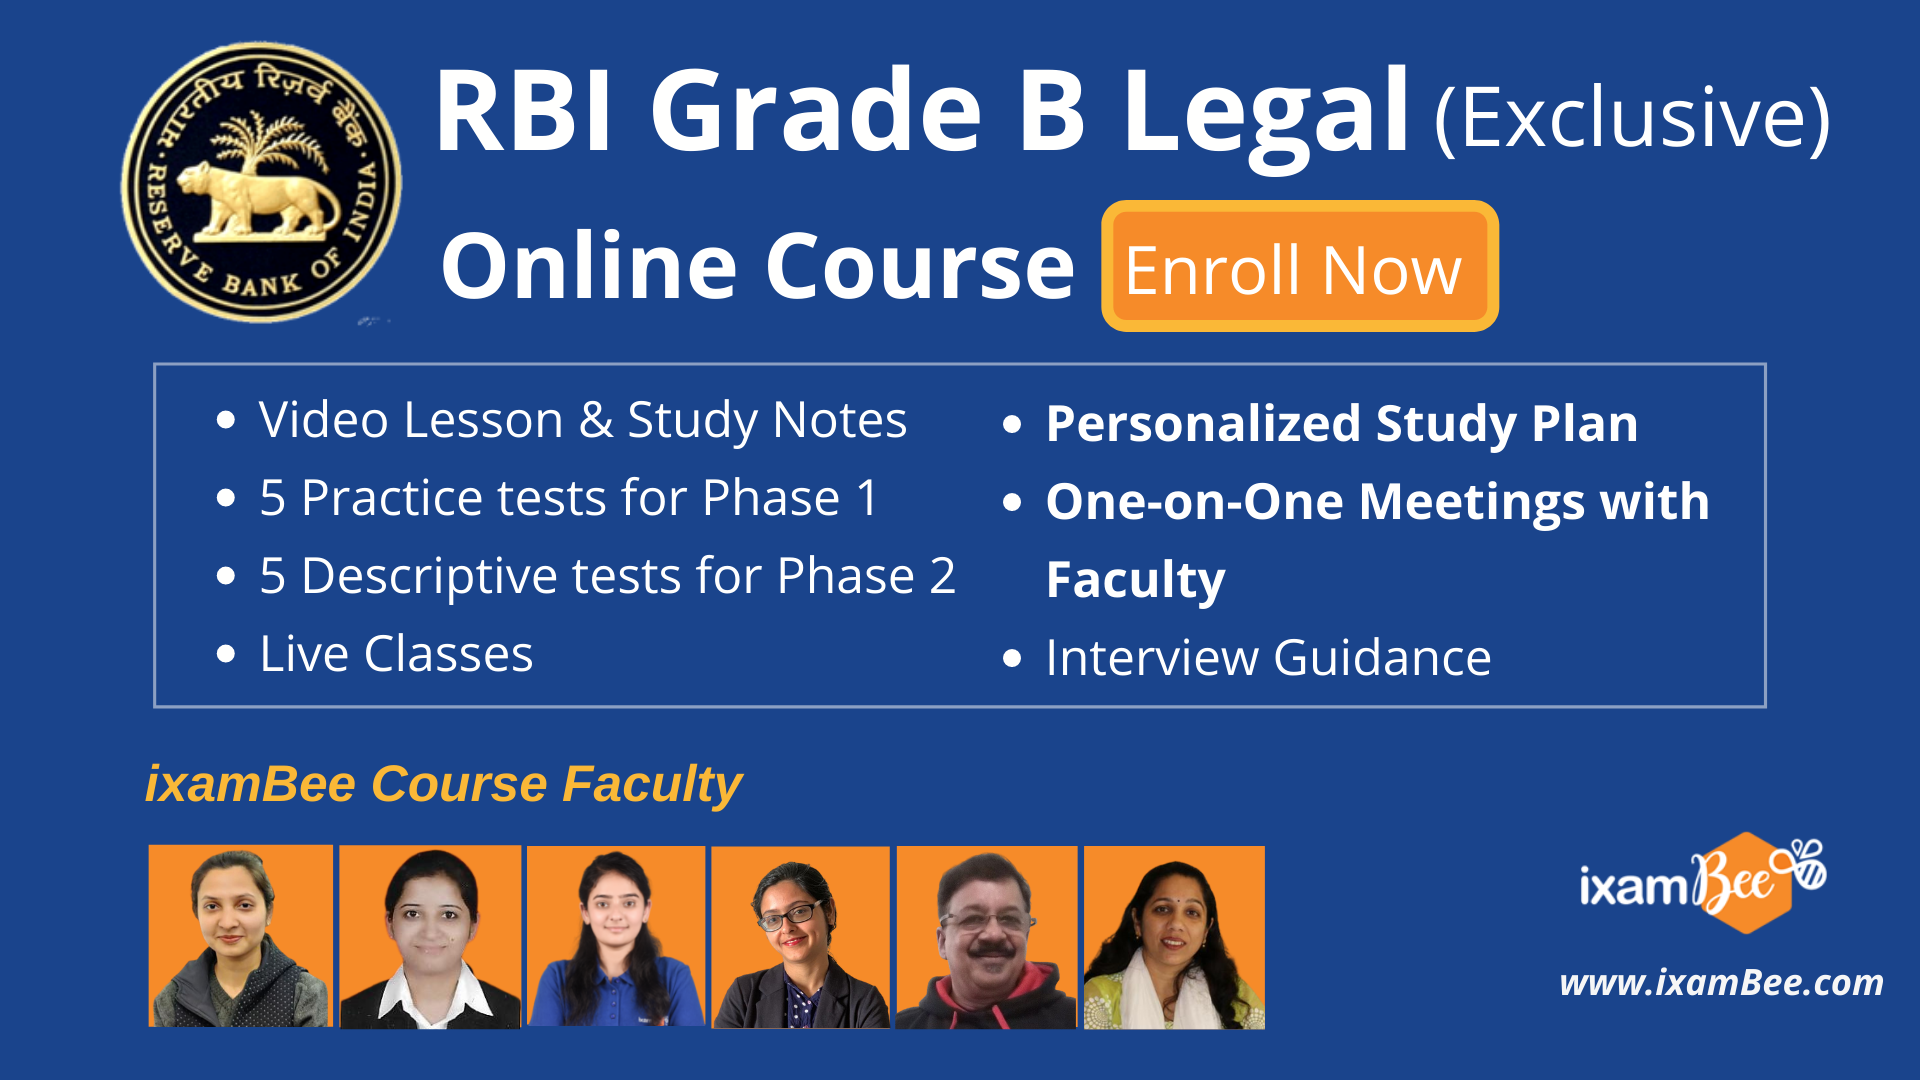 RBI Grade B Exclusive Online Course